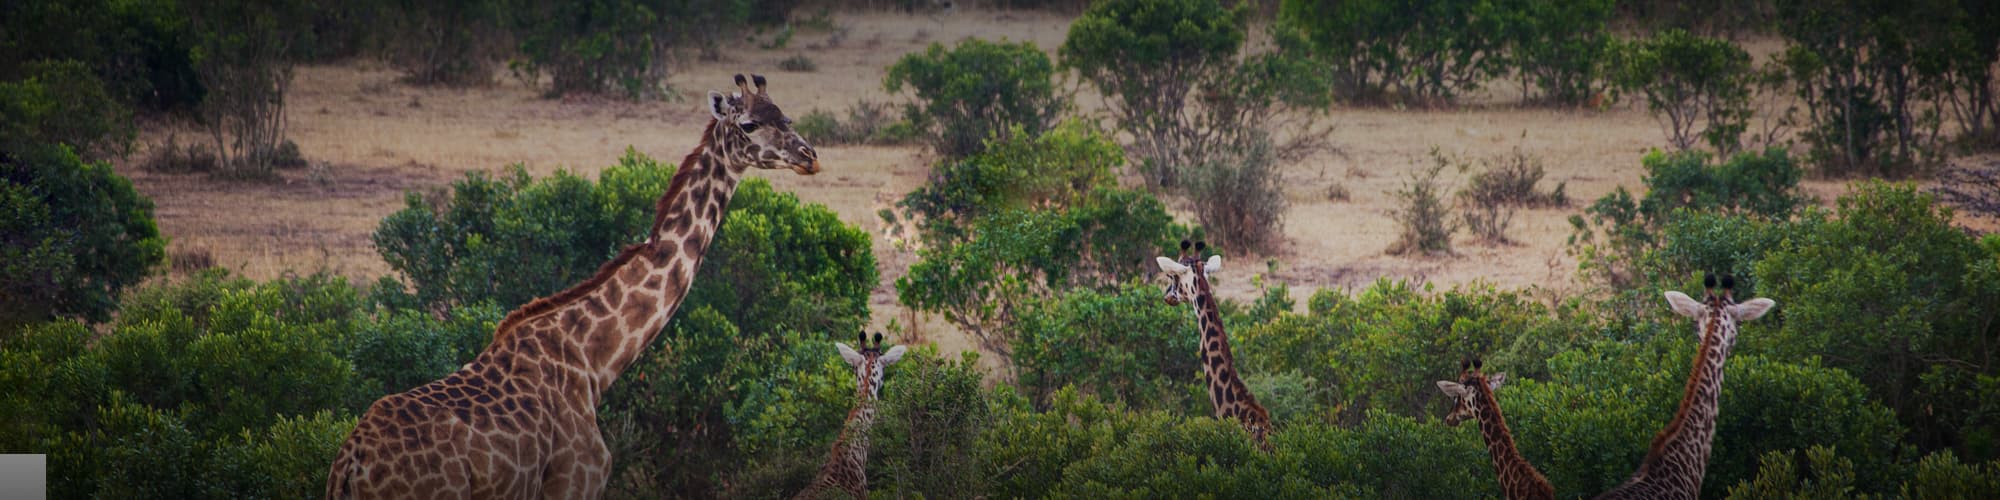 Safari au Togo : circuit, randonnée et voyage © alantobey/iStock